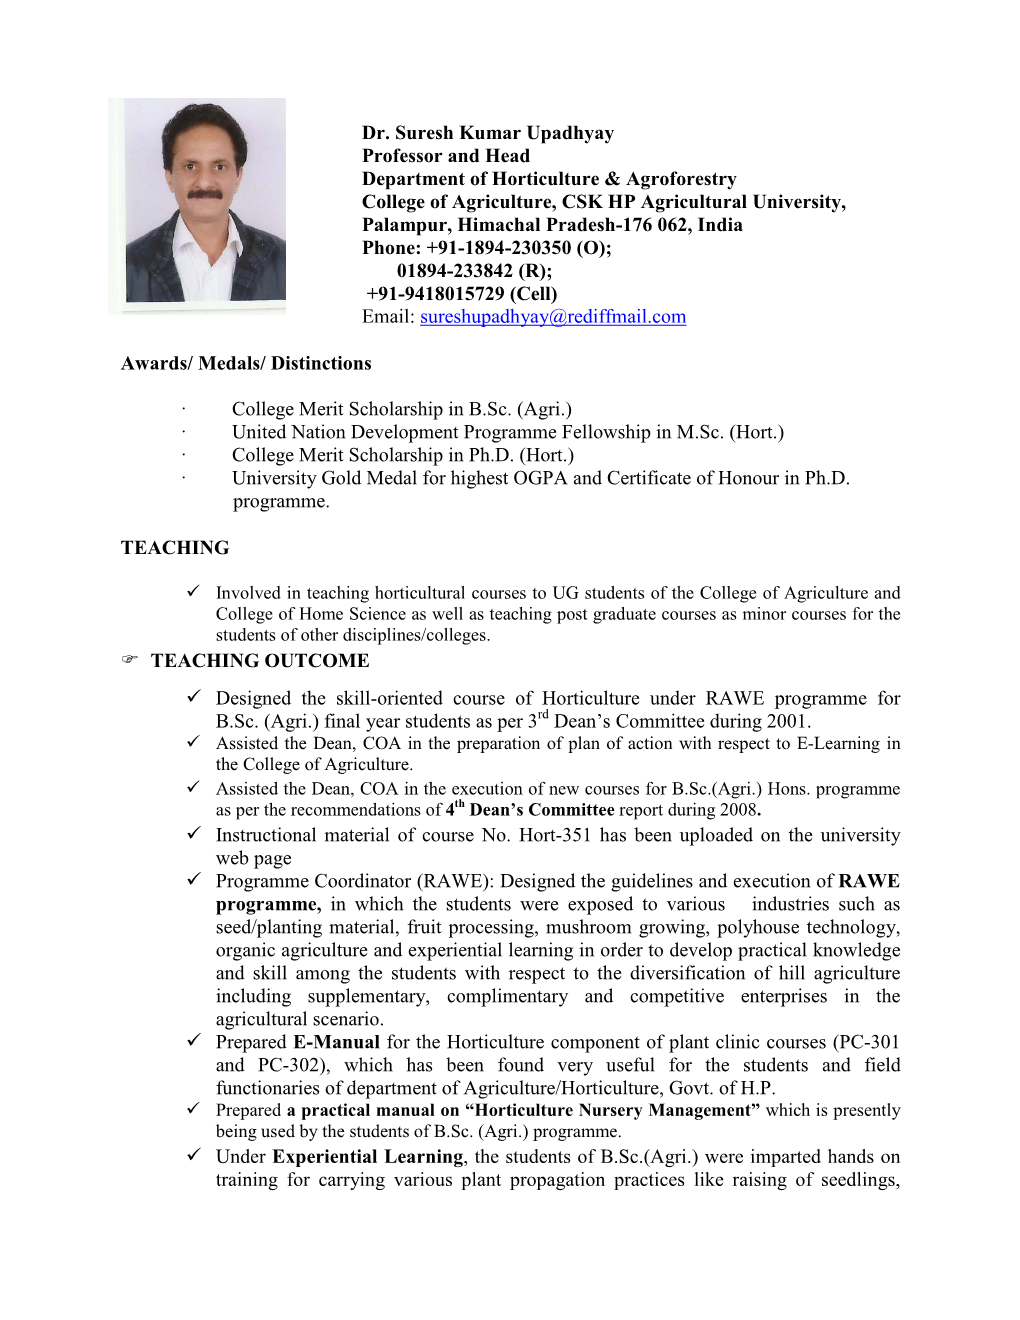 Dr. Suresh Kumar Upadhyay Professor and Head Department Of